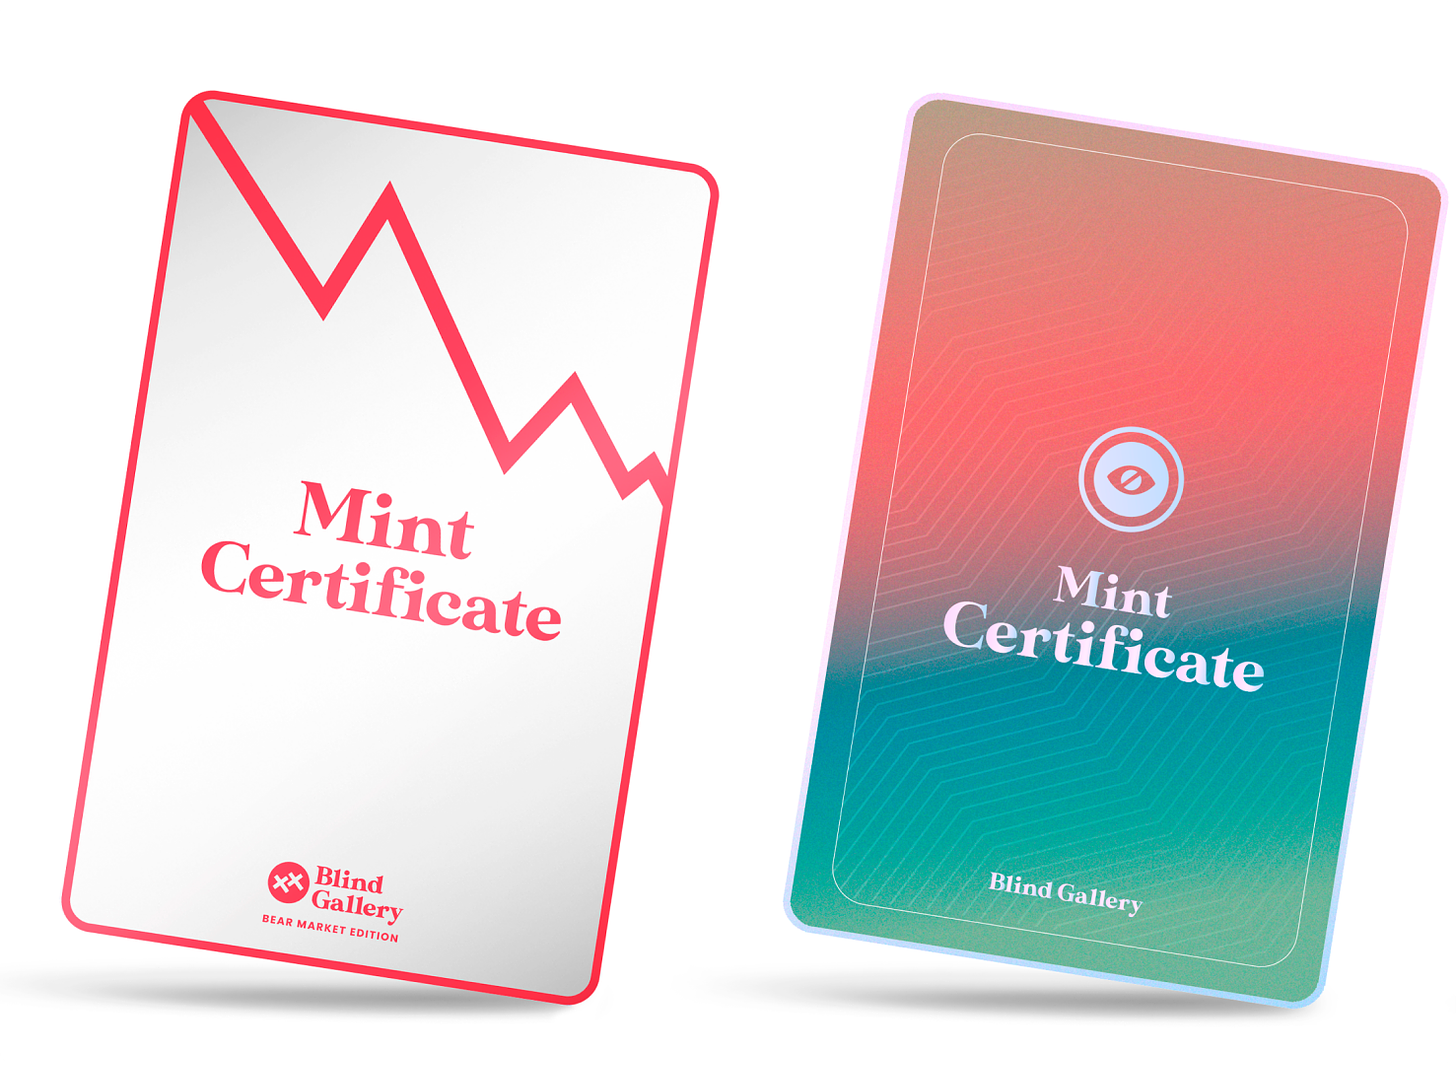 mint certificate image